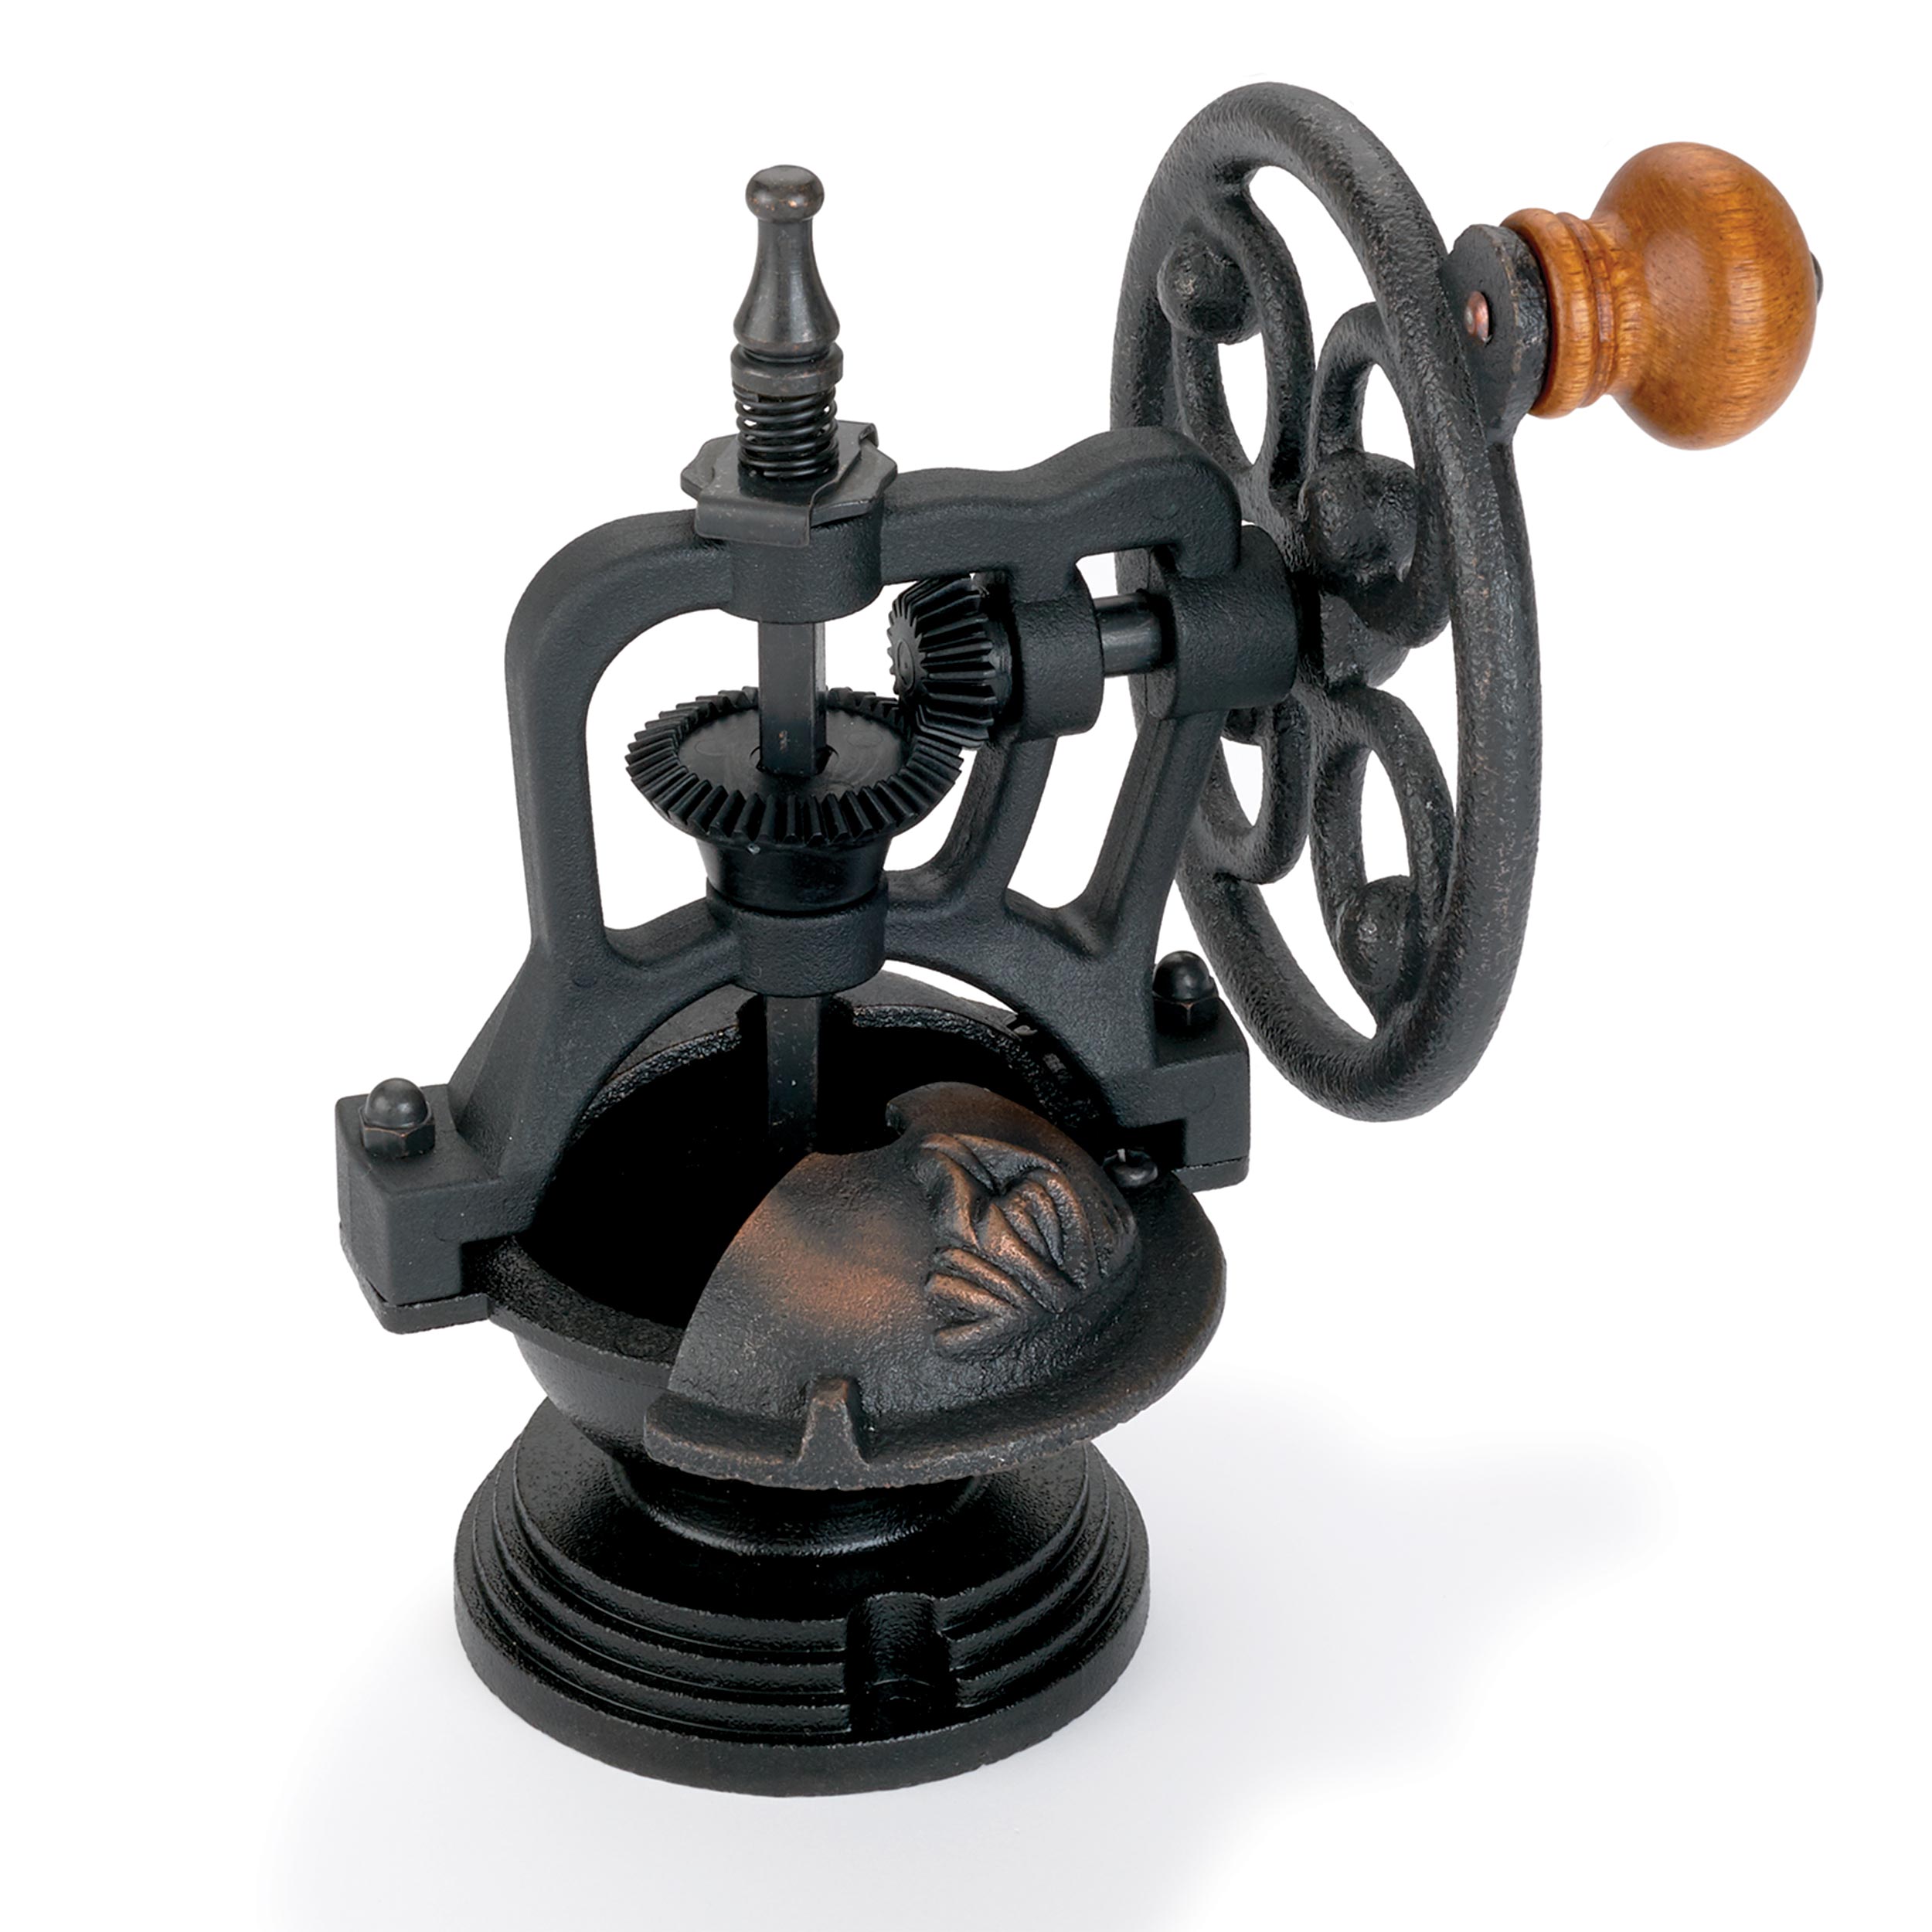 Antique Style Side Crank Coffee Grinder Kit Mechanism Cast Bronzed